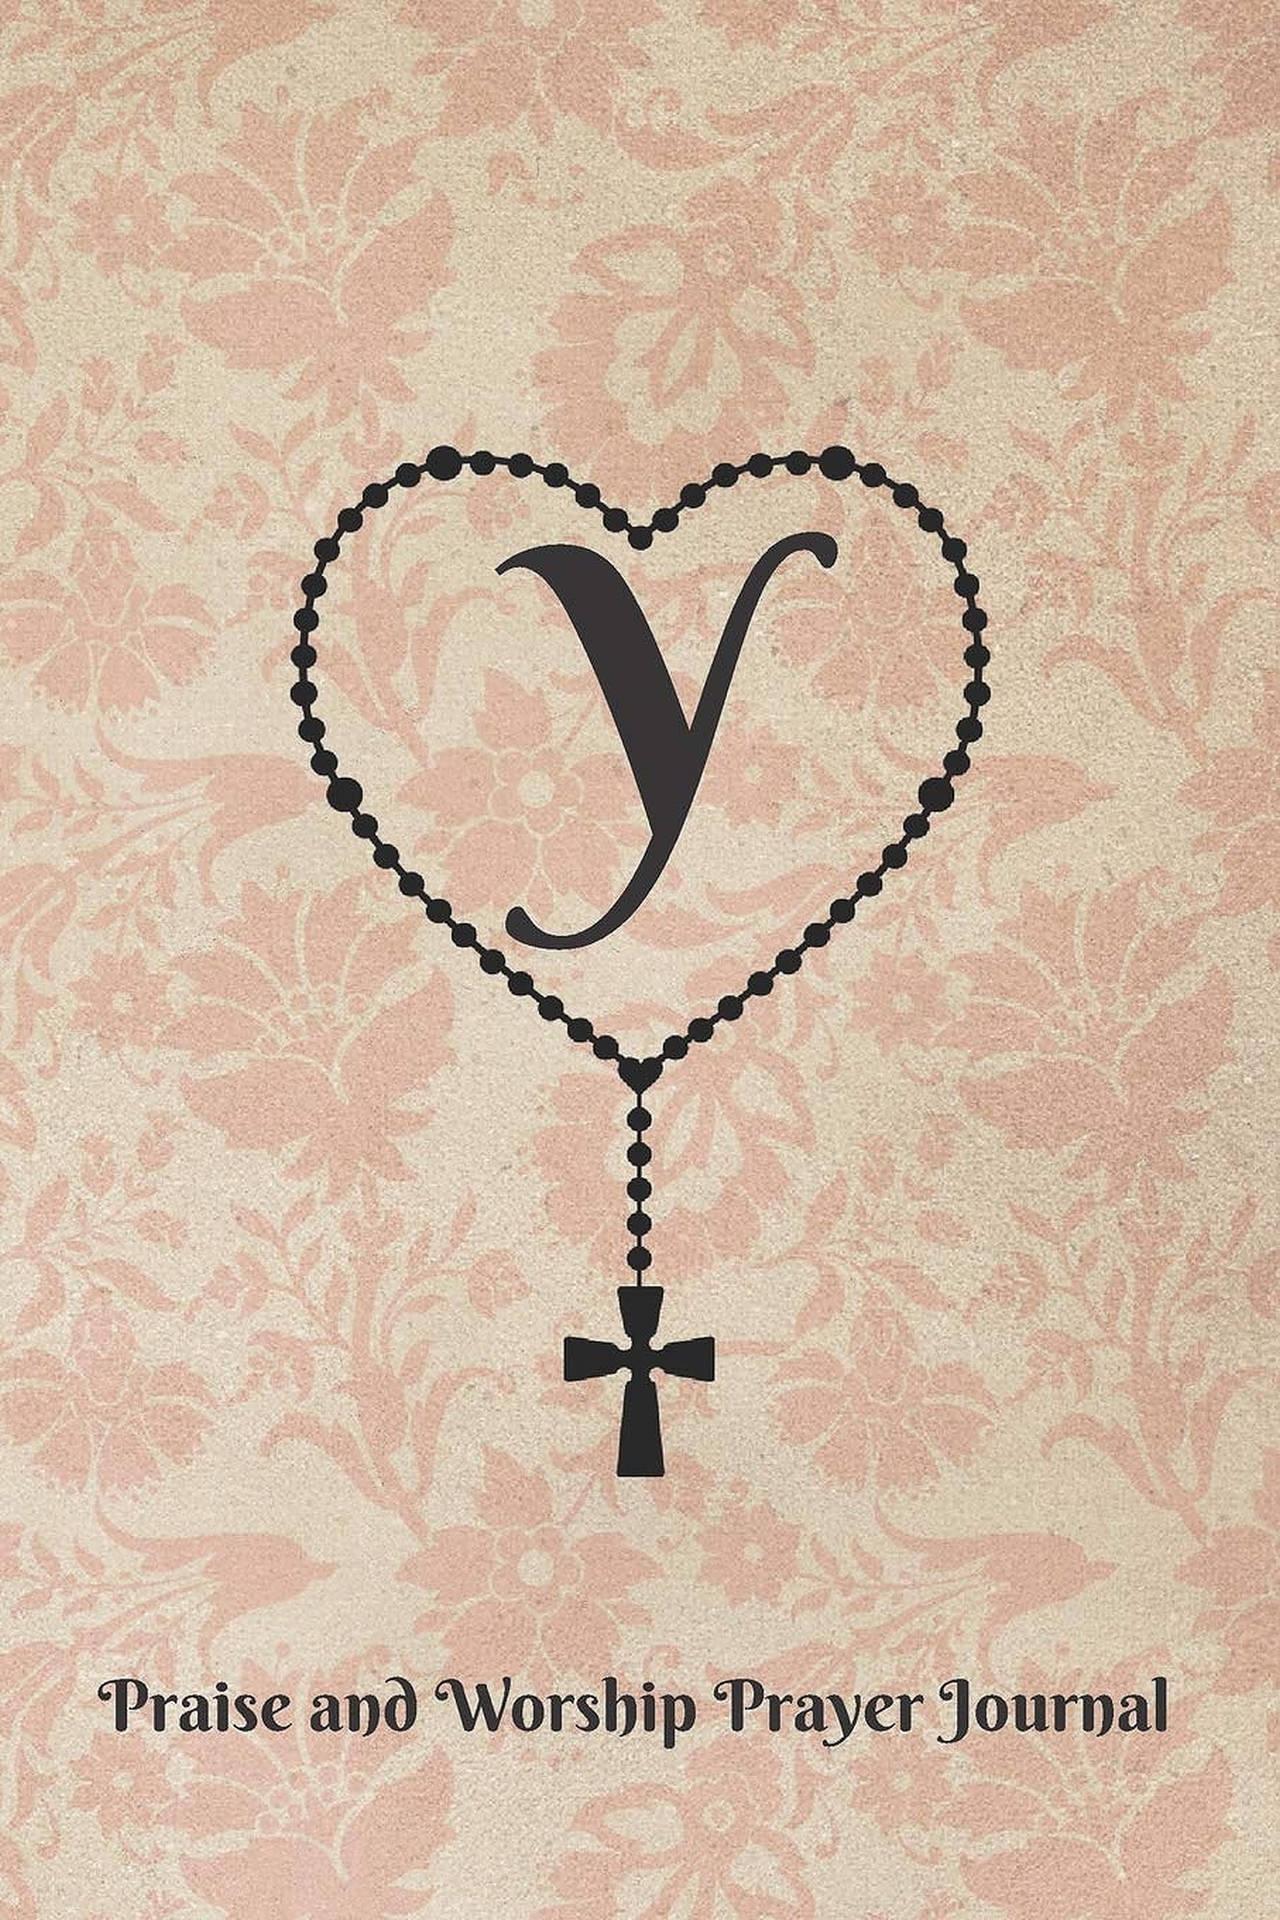 Stunning Letter Y embellished on a prayer journal cover Wallpaper